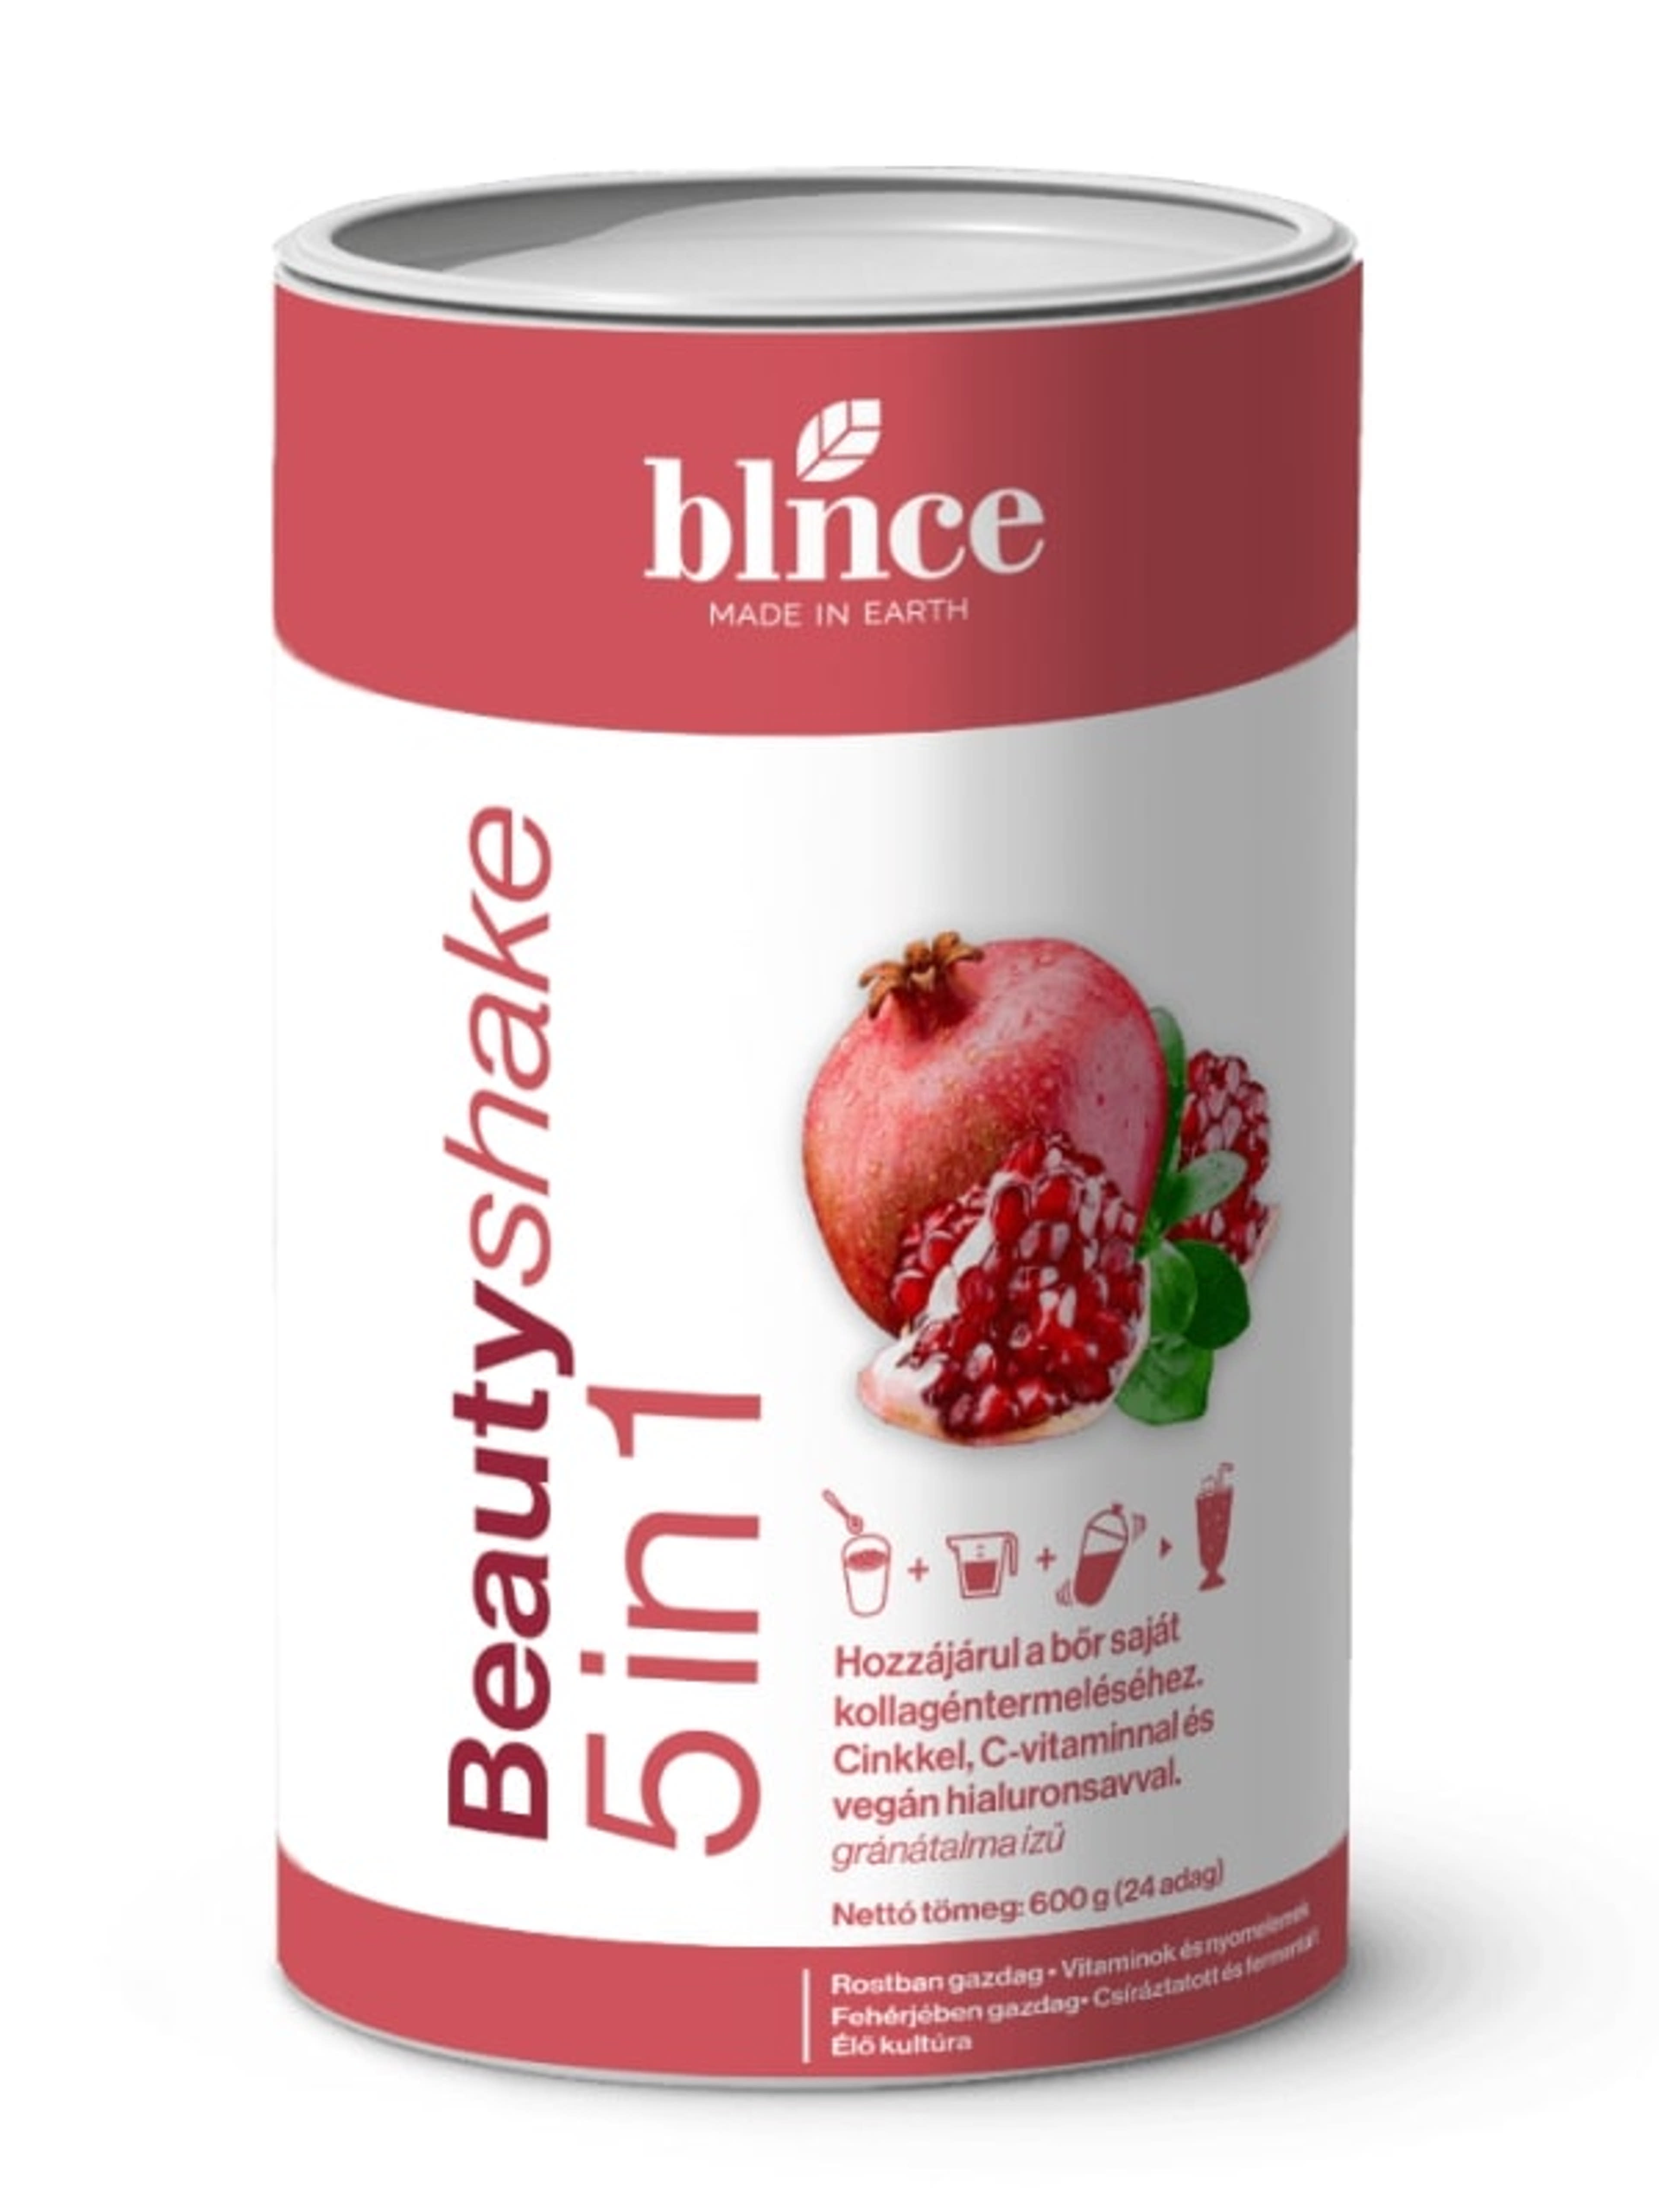 Blnce Beautyshake 5in1 fogyókúrás italpor - 600 g